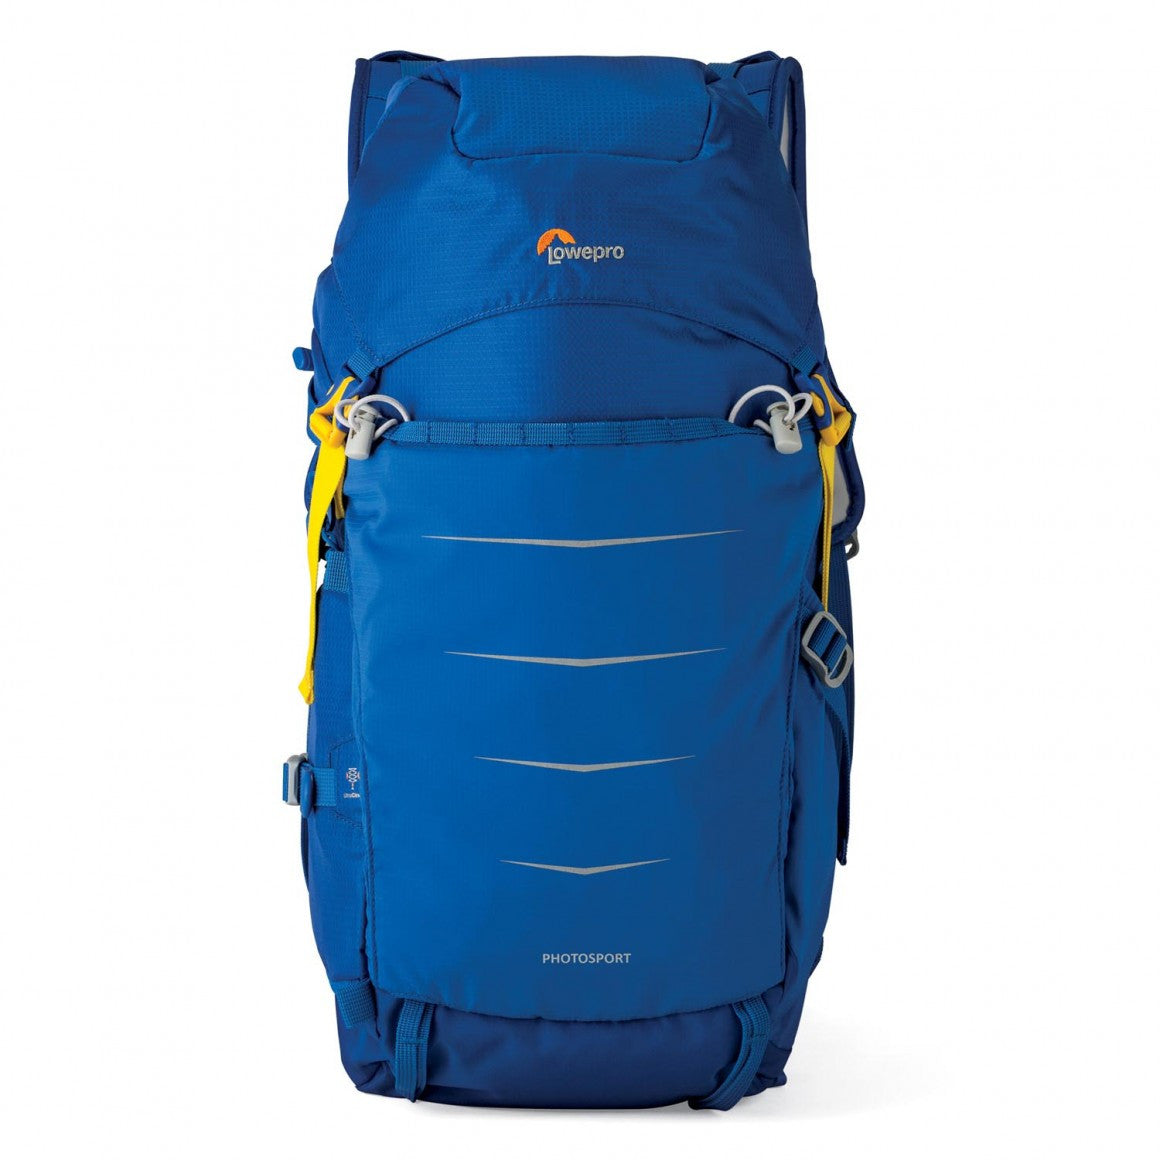 Lowepro Photo Sport 300 AW II Backpack (Blue), bags backpacks, Lowepro - Pictureline  - 1